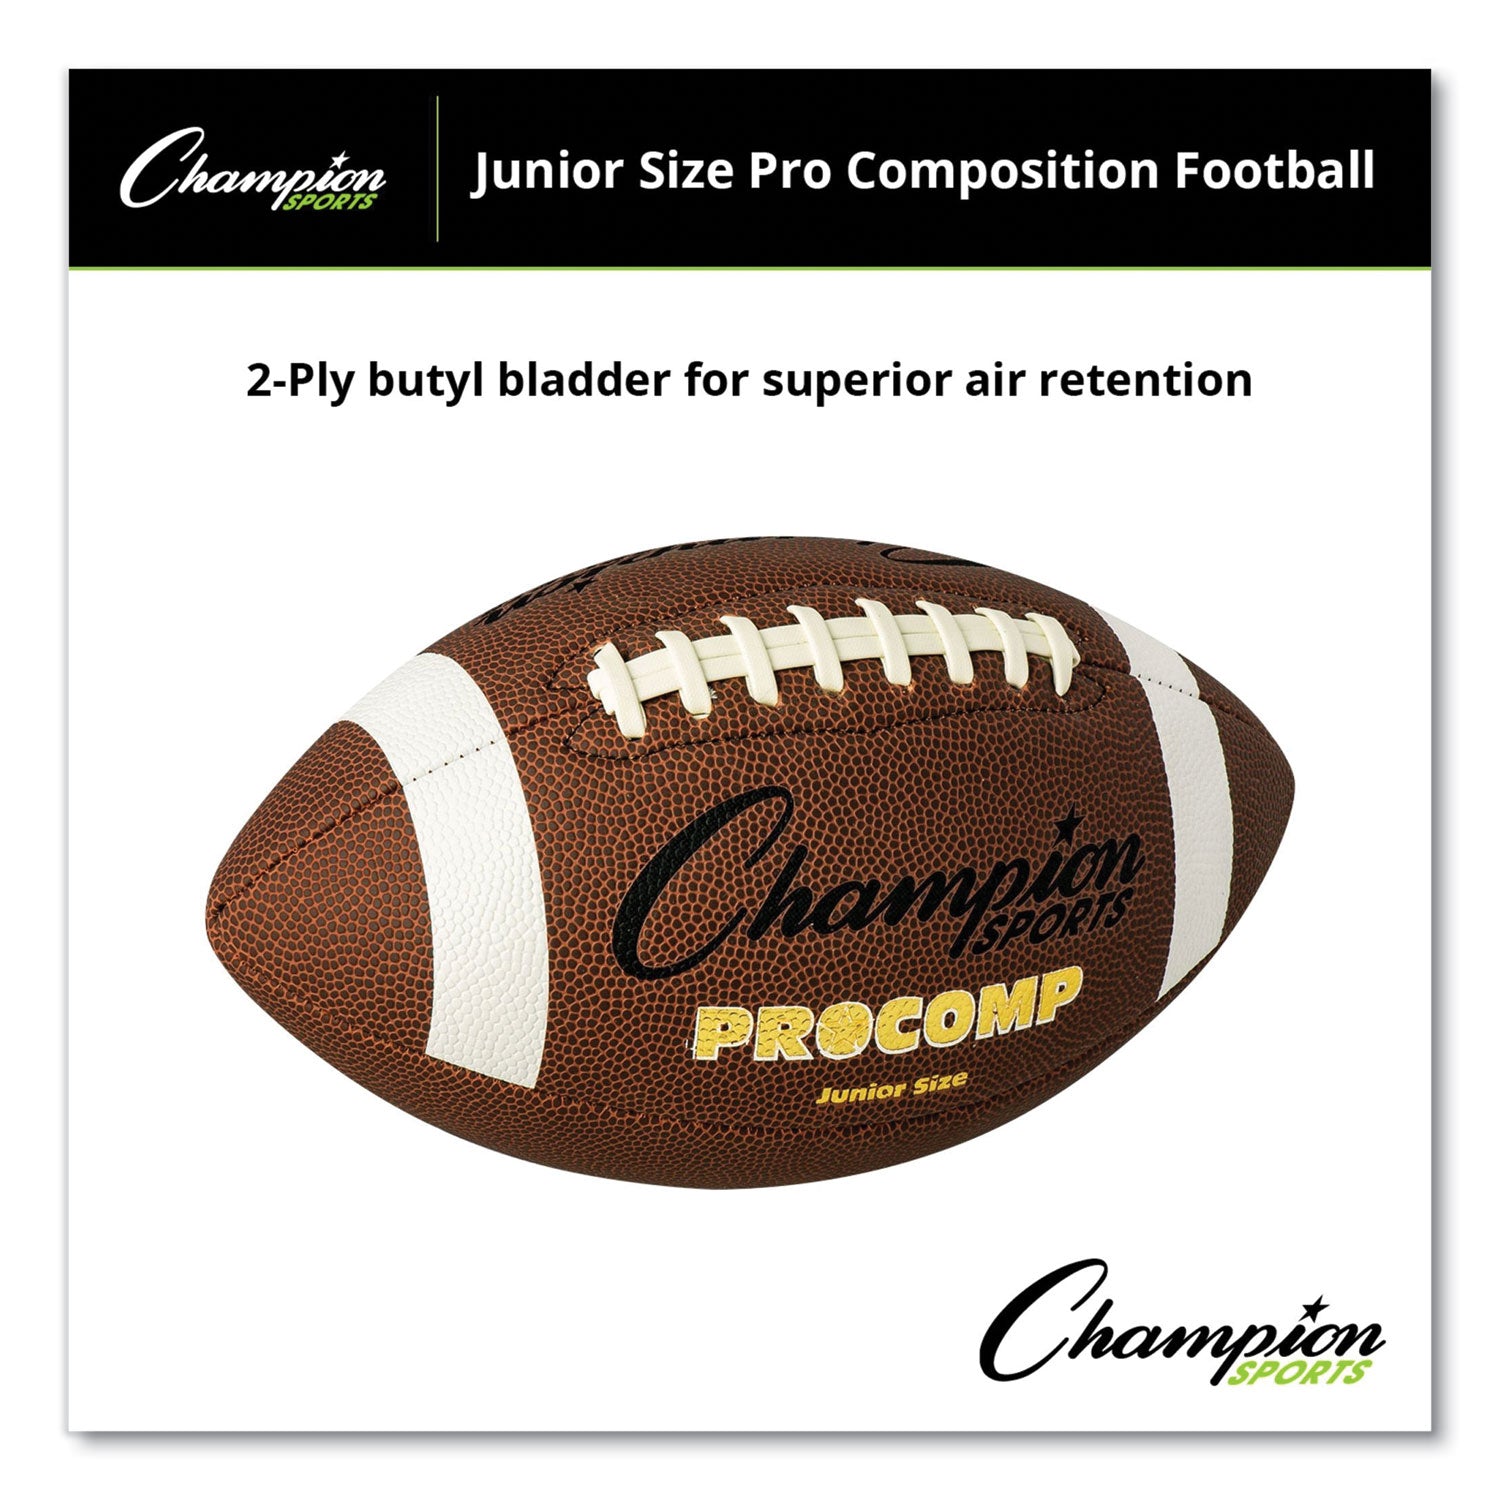 Pro Composite Football, Junior Size, Brown - 